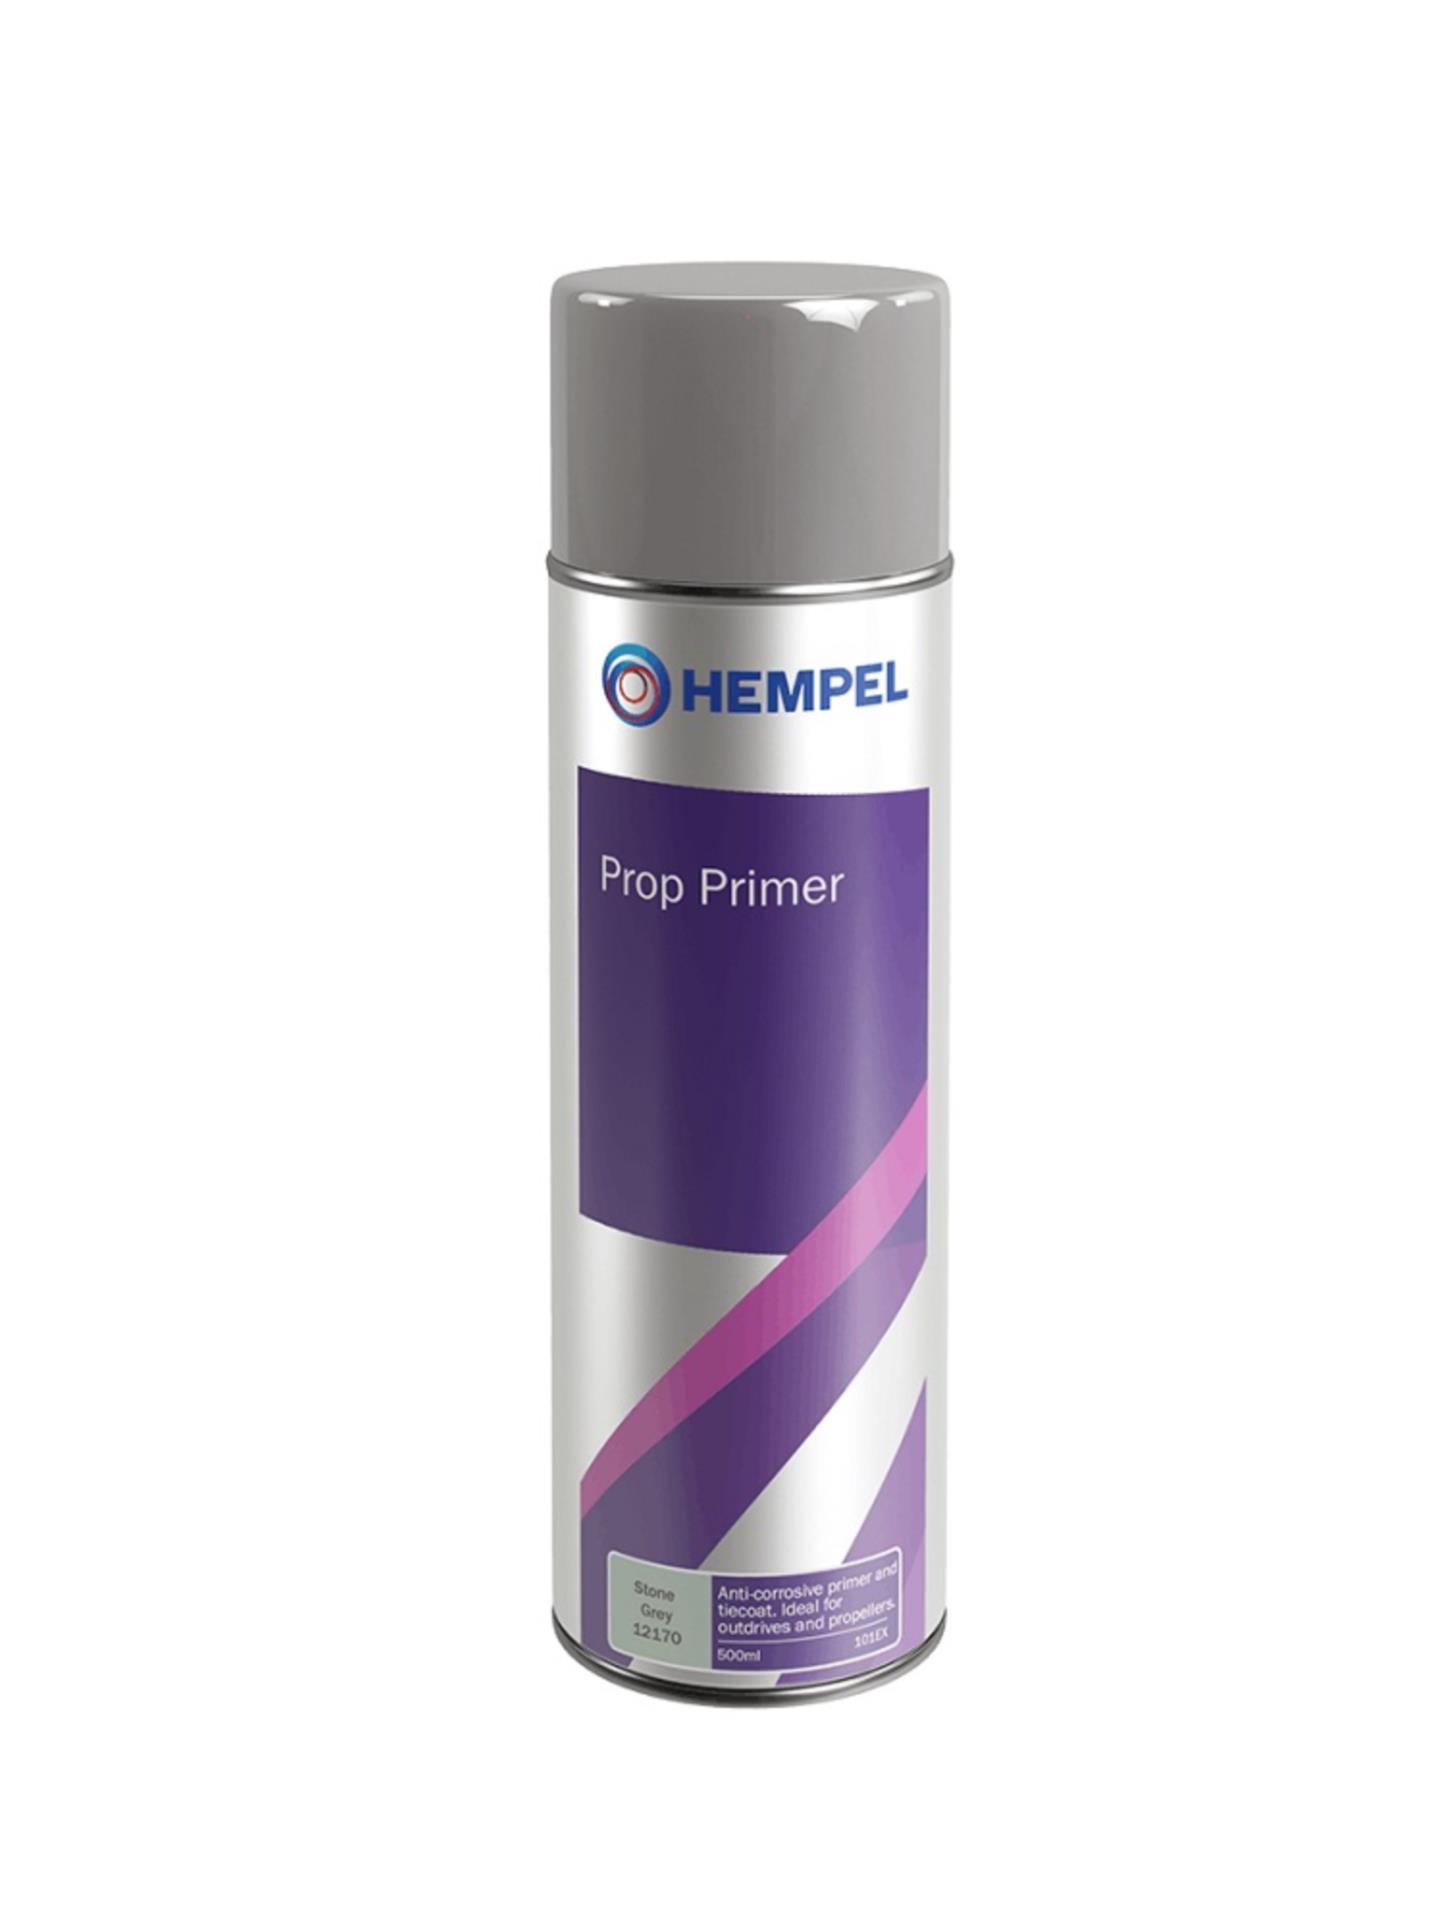 Hempel Prop Primer 101EX stone grey, 500 ml